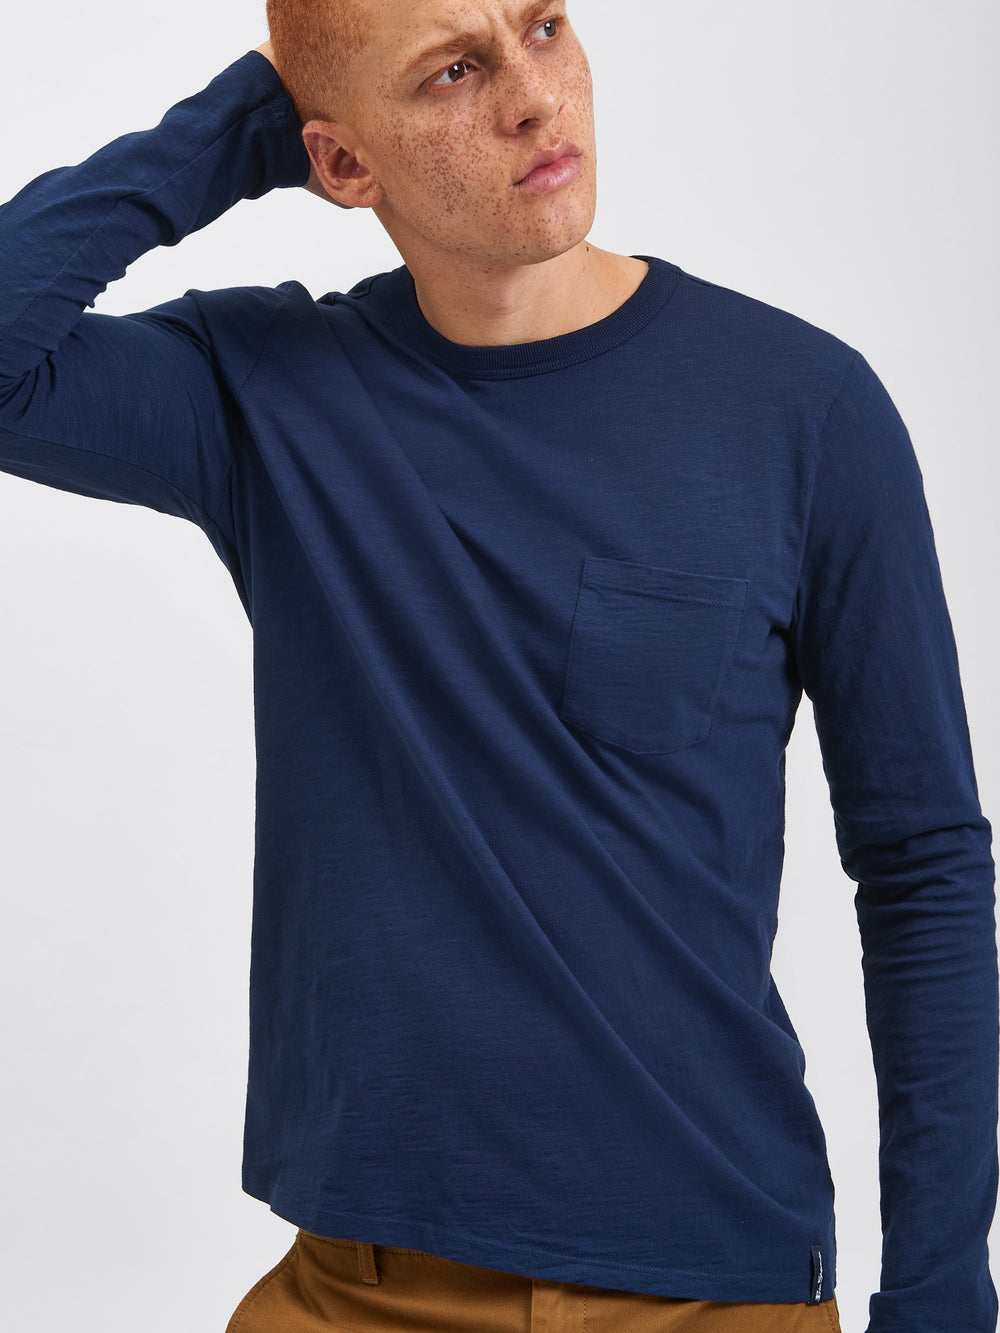 Garment Dye Beatnik Long-Sleeve T-Shirt - Navy Indigo